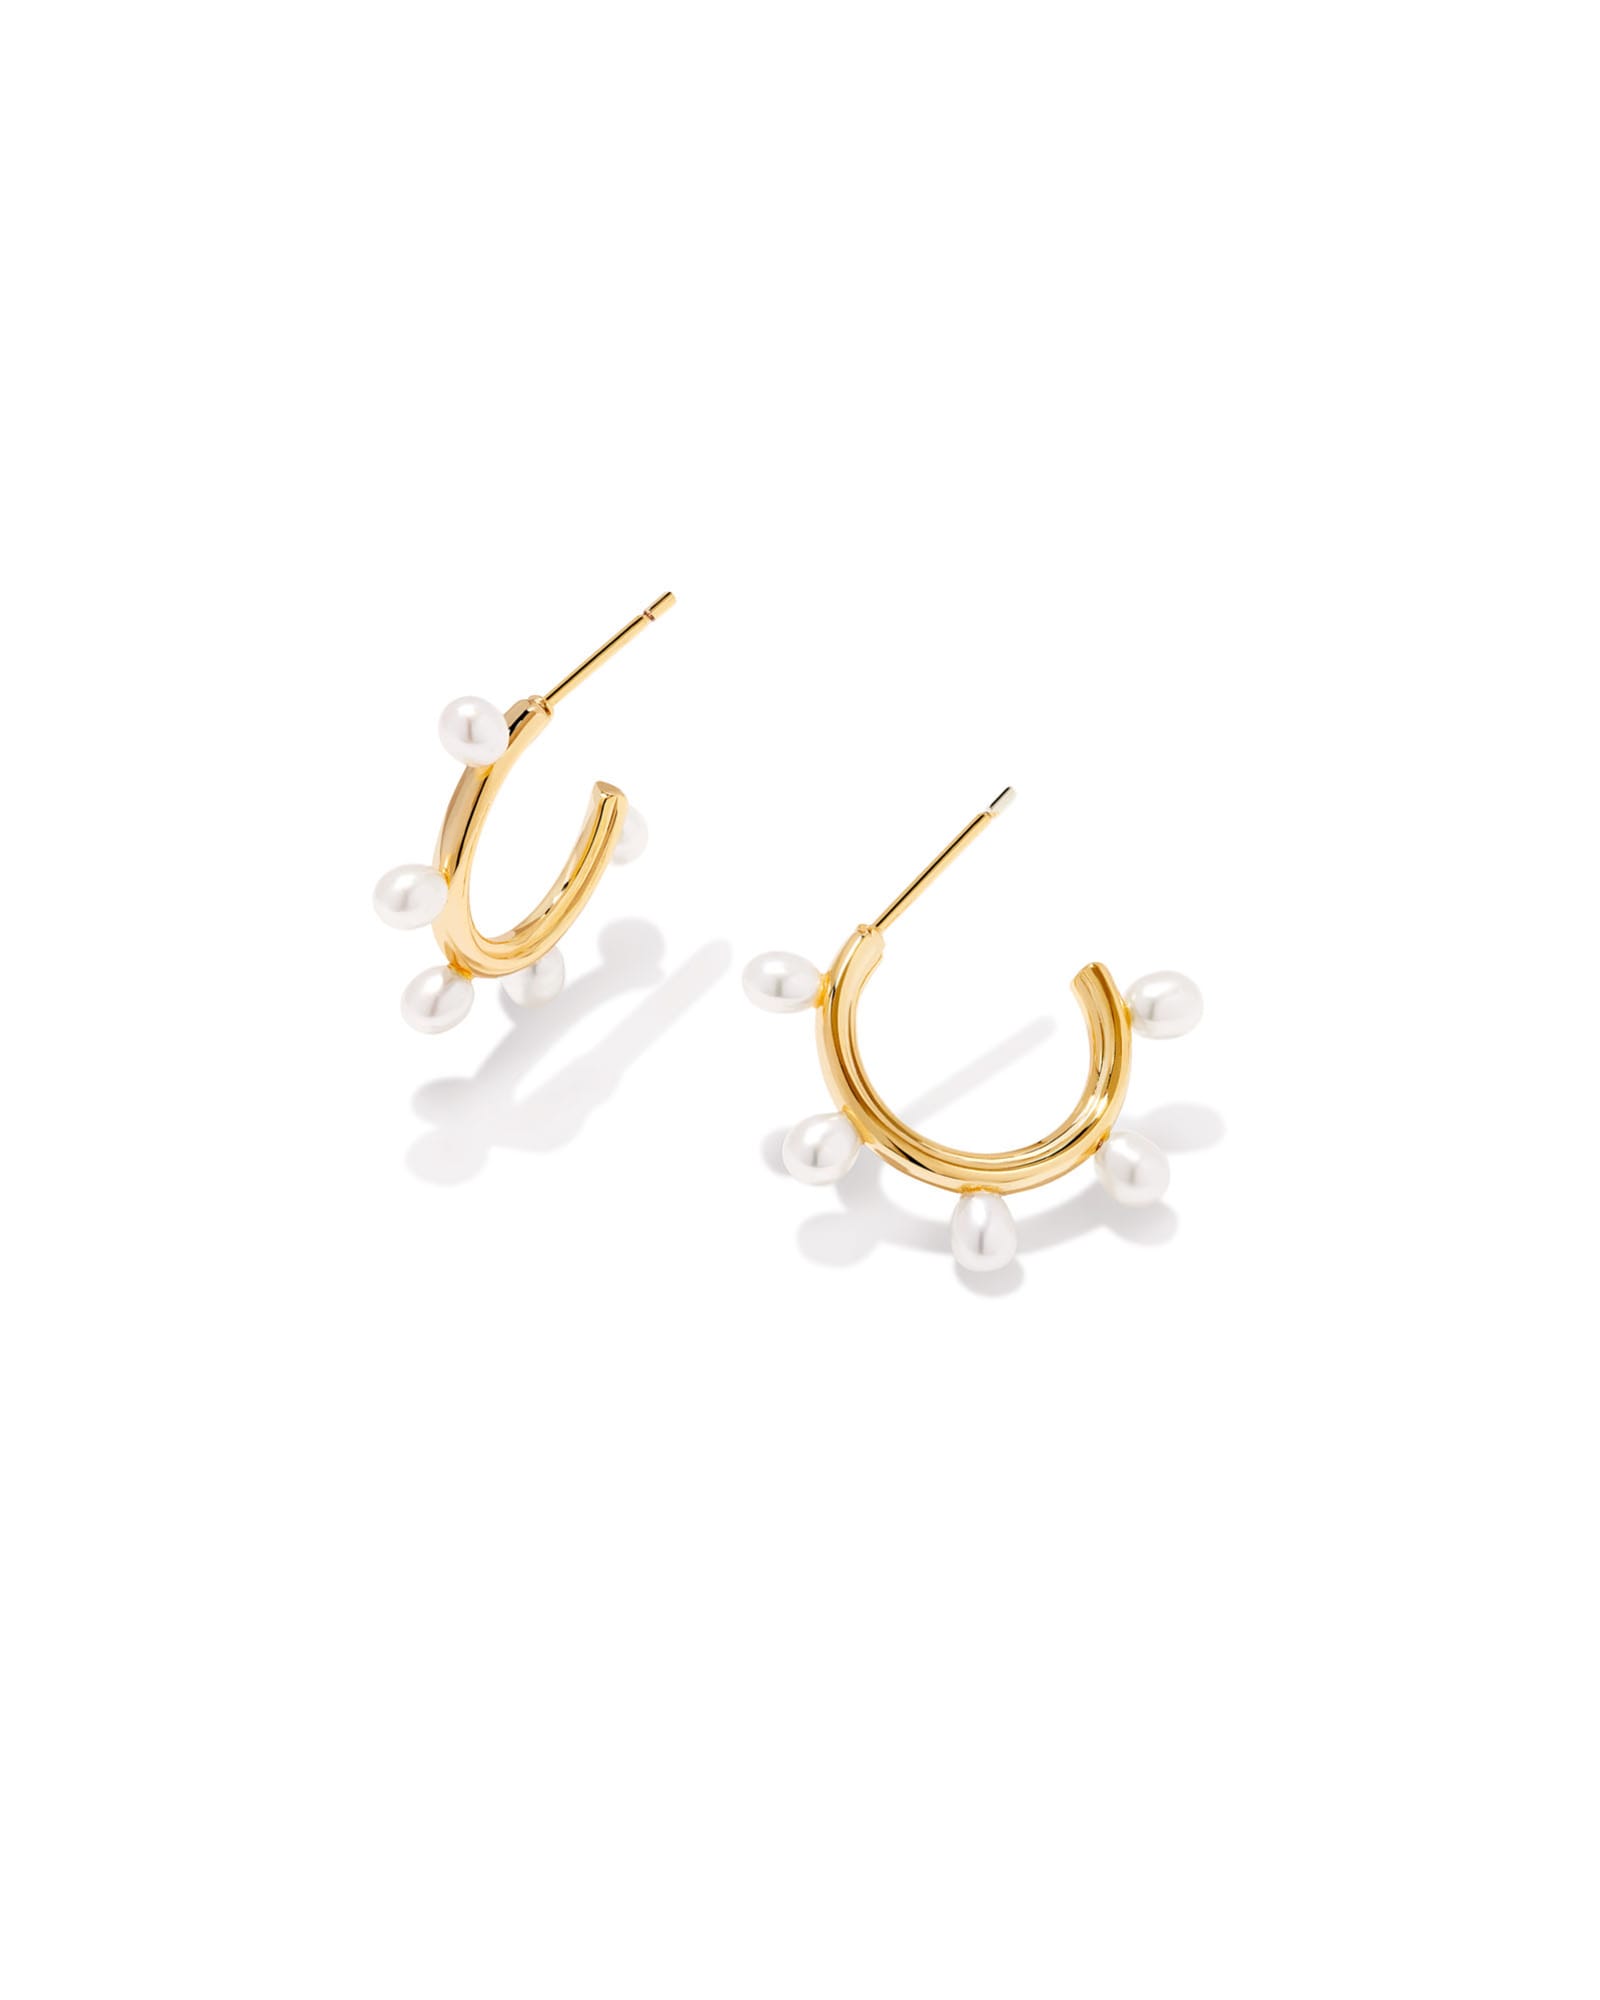 Kendra Scott Leighton Gold Huggie Earrings in White | Pearl